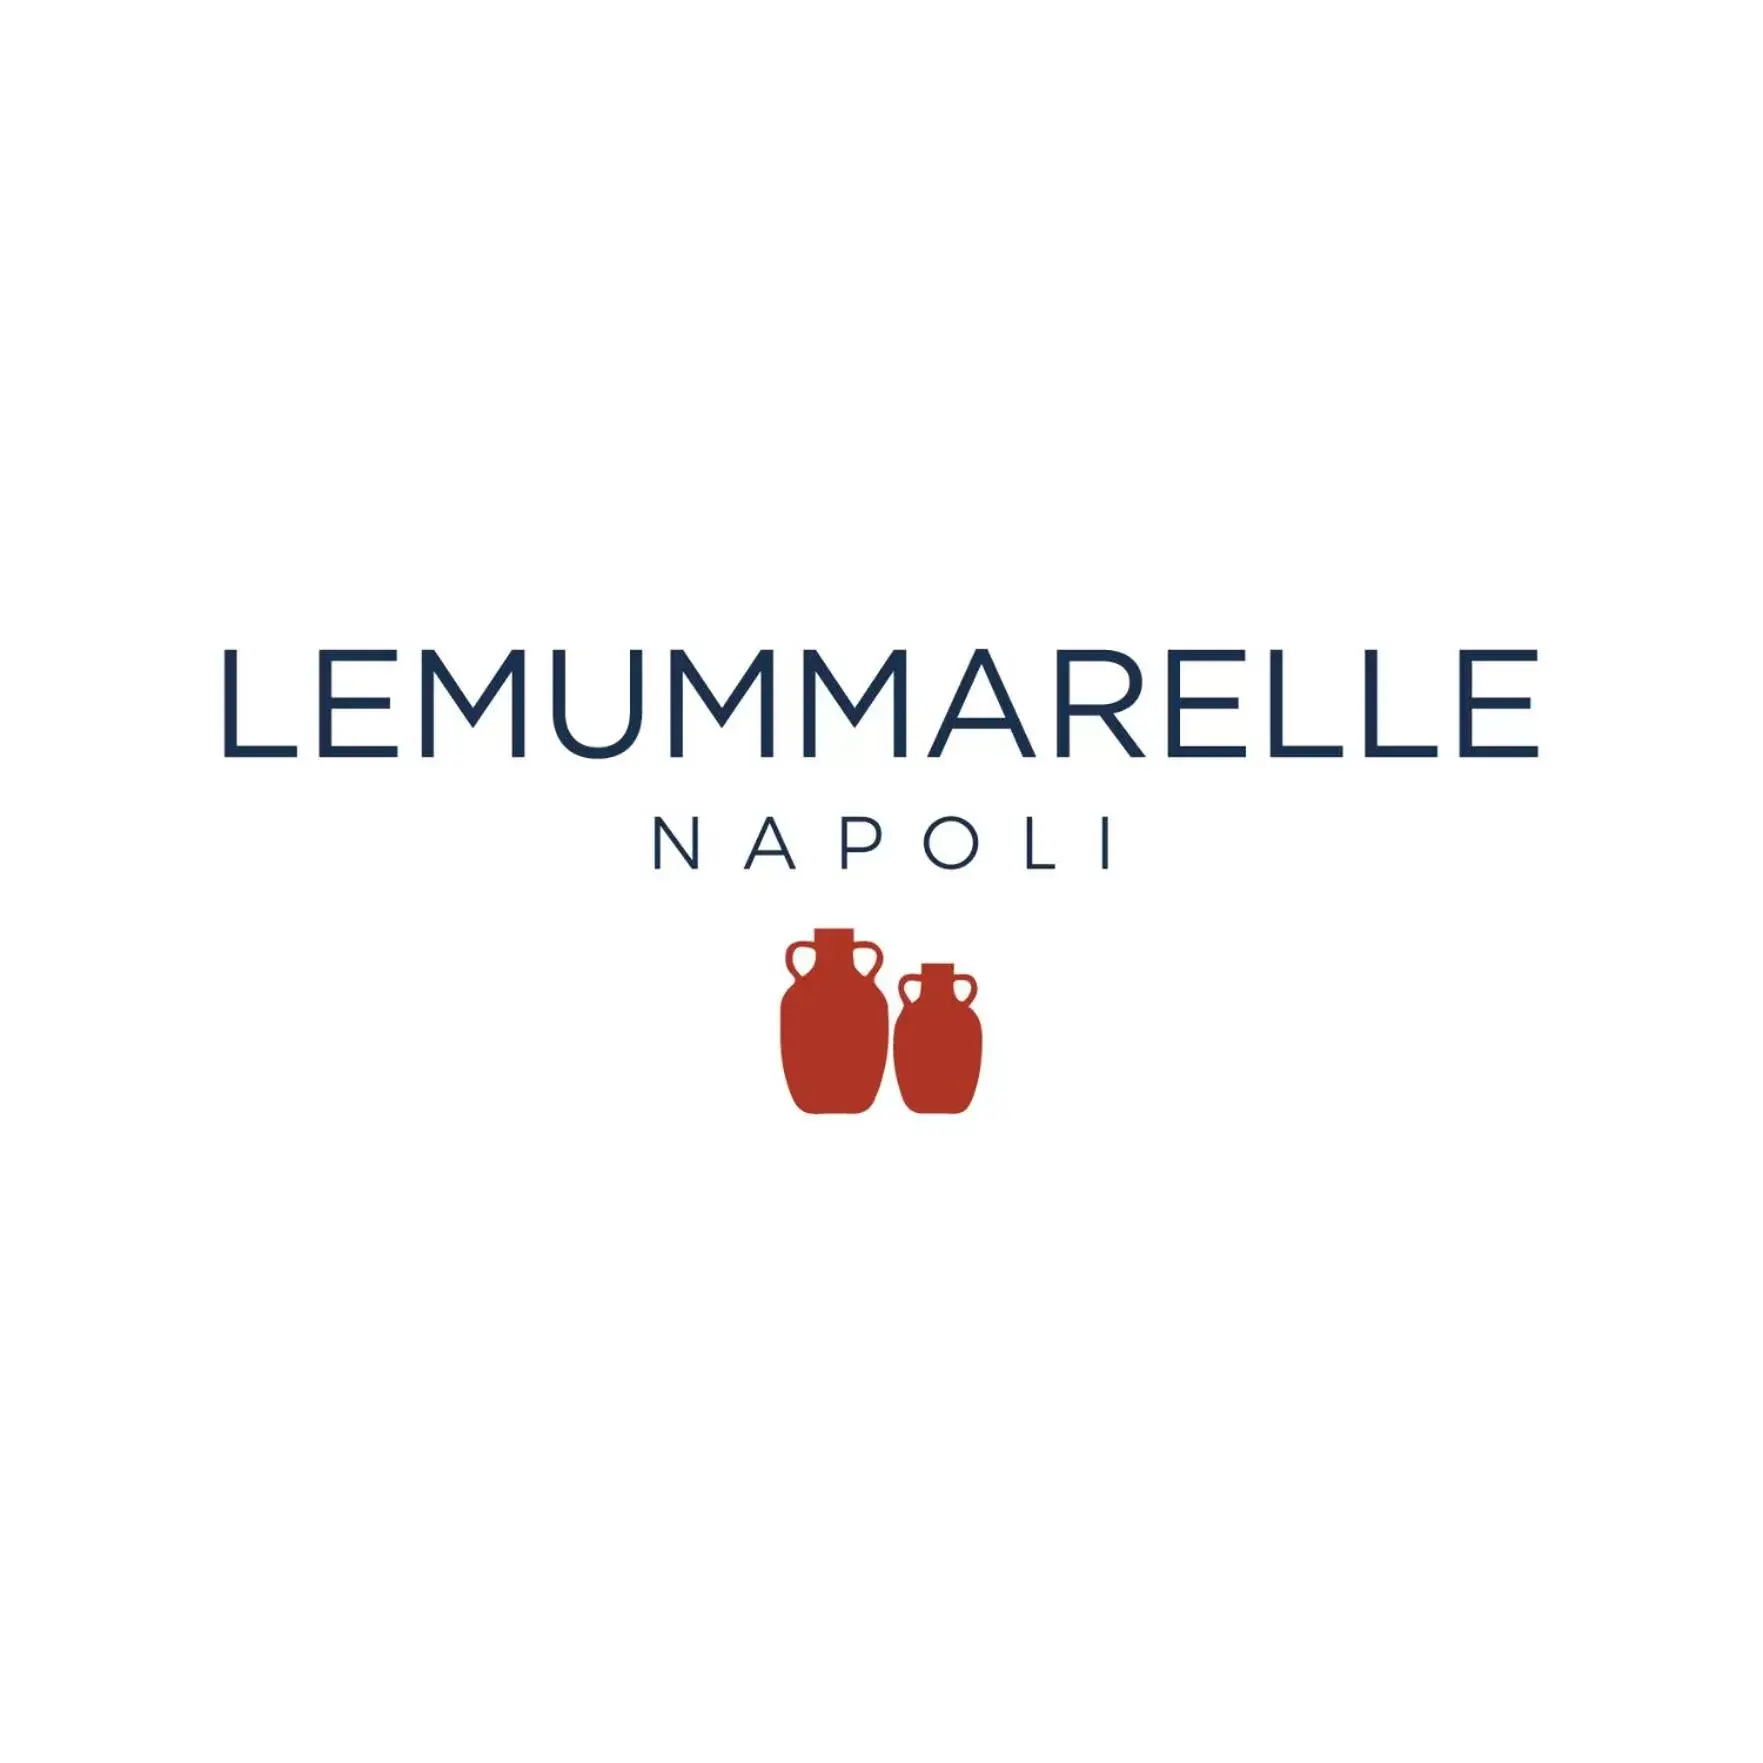 Property logo or sign, Property Logo/Sign in Le Mummarelle Napoli